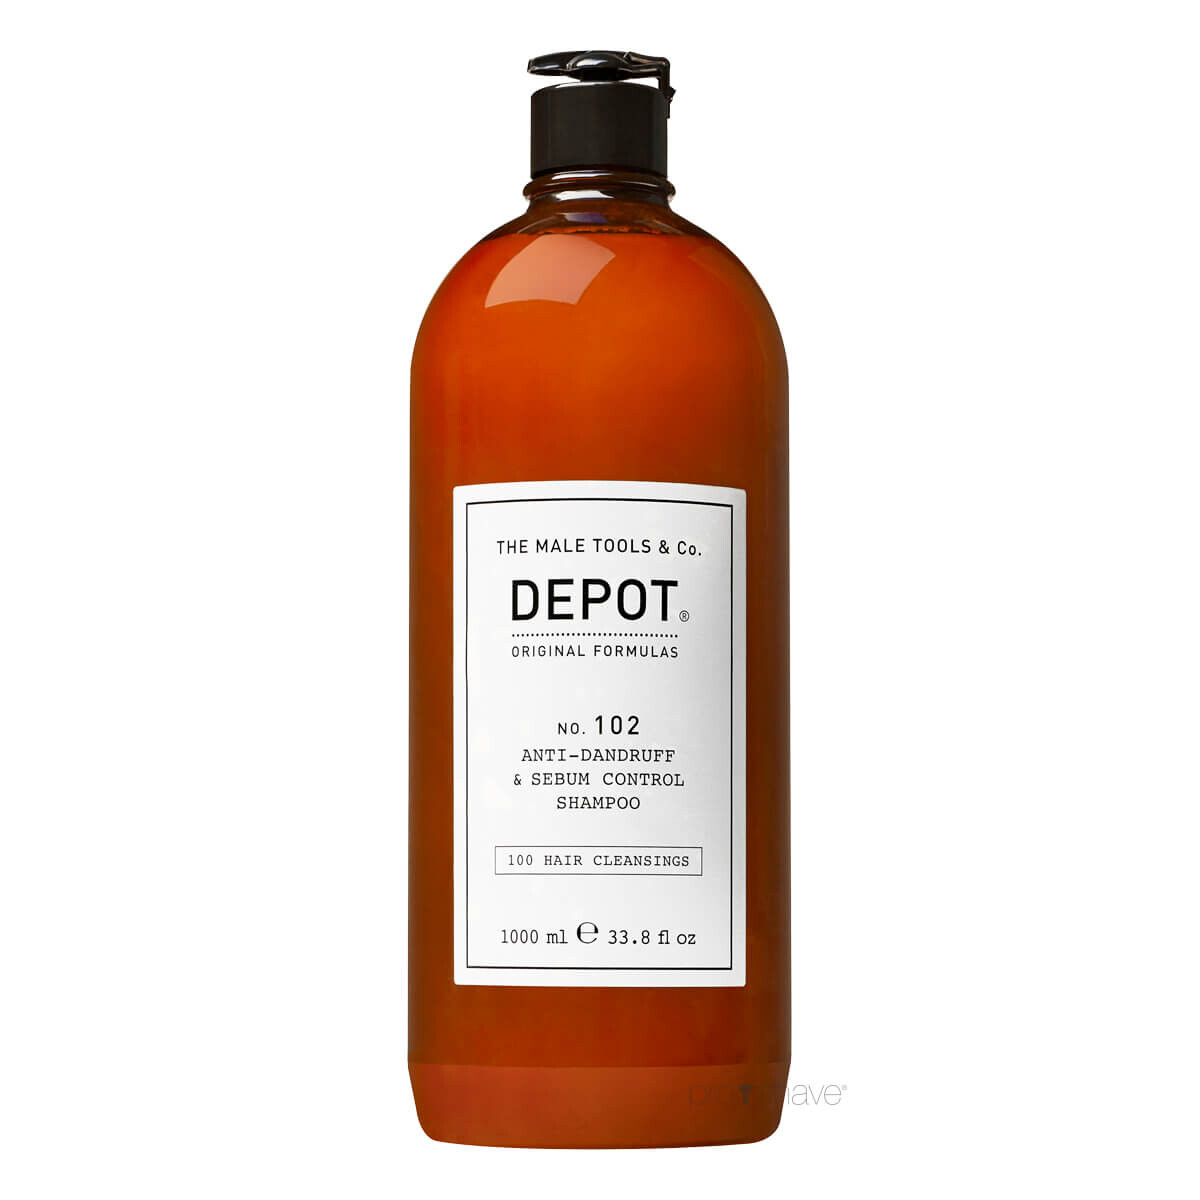 Depot Anti-Dandruff & Sebum Control Shampoo, No. 102, 1000 ml.